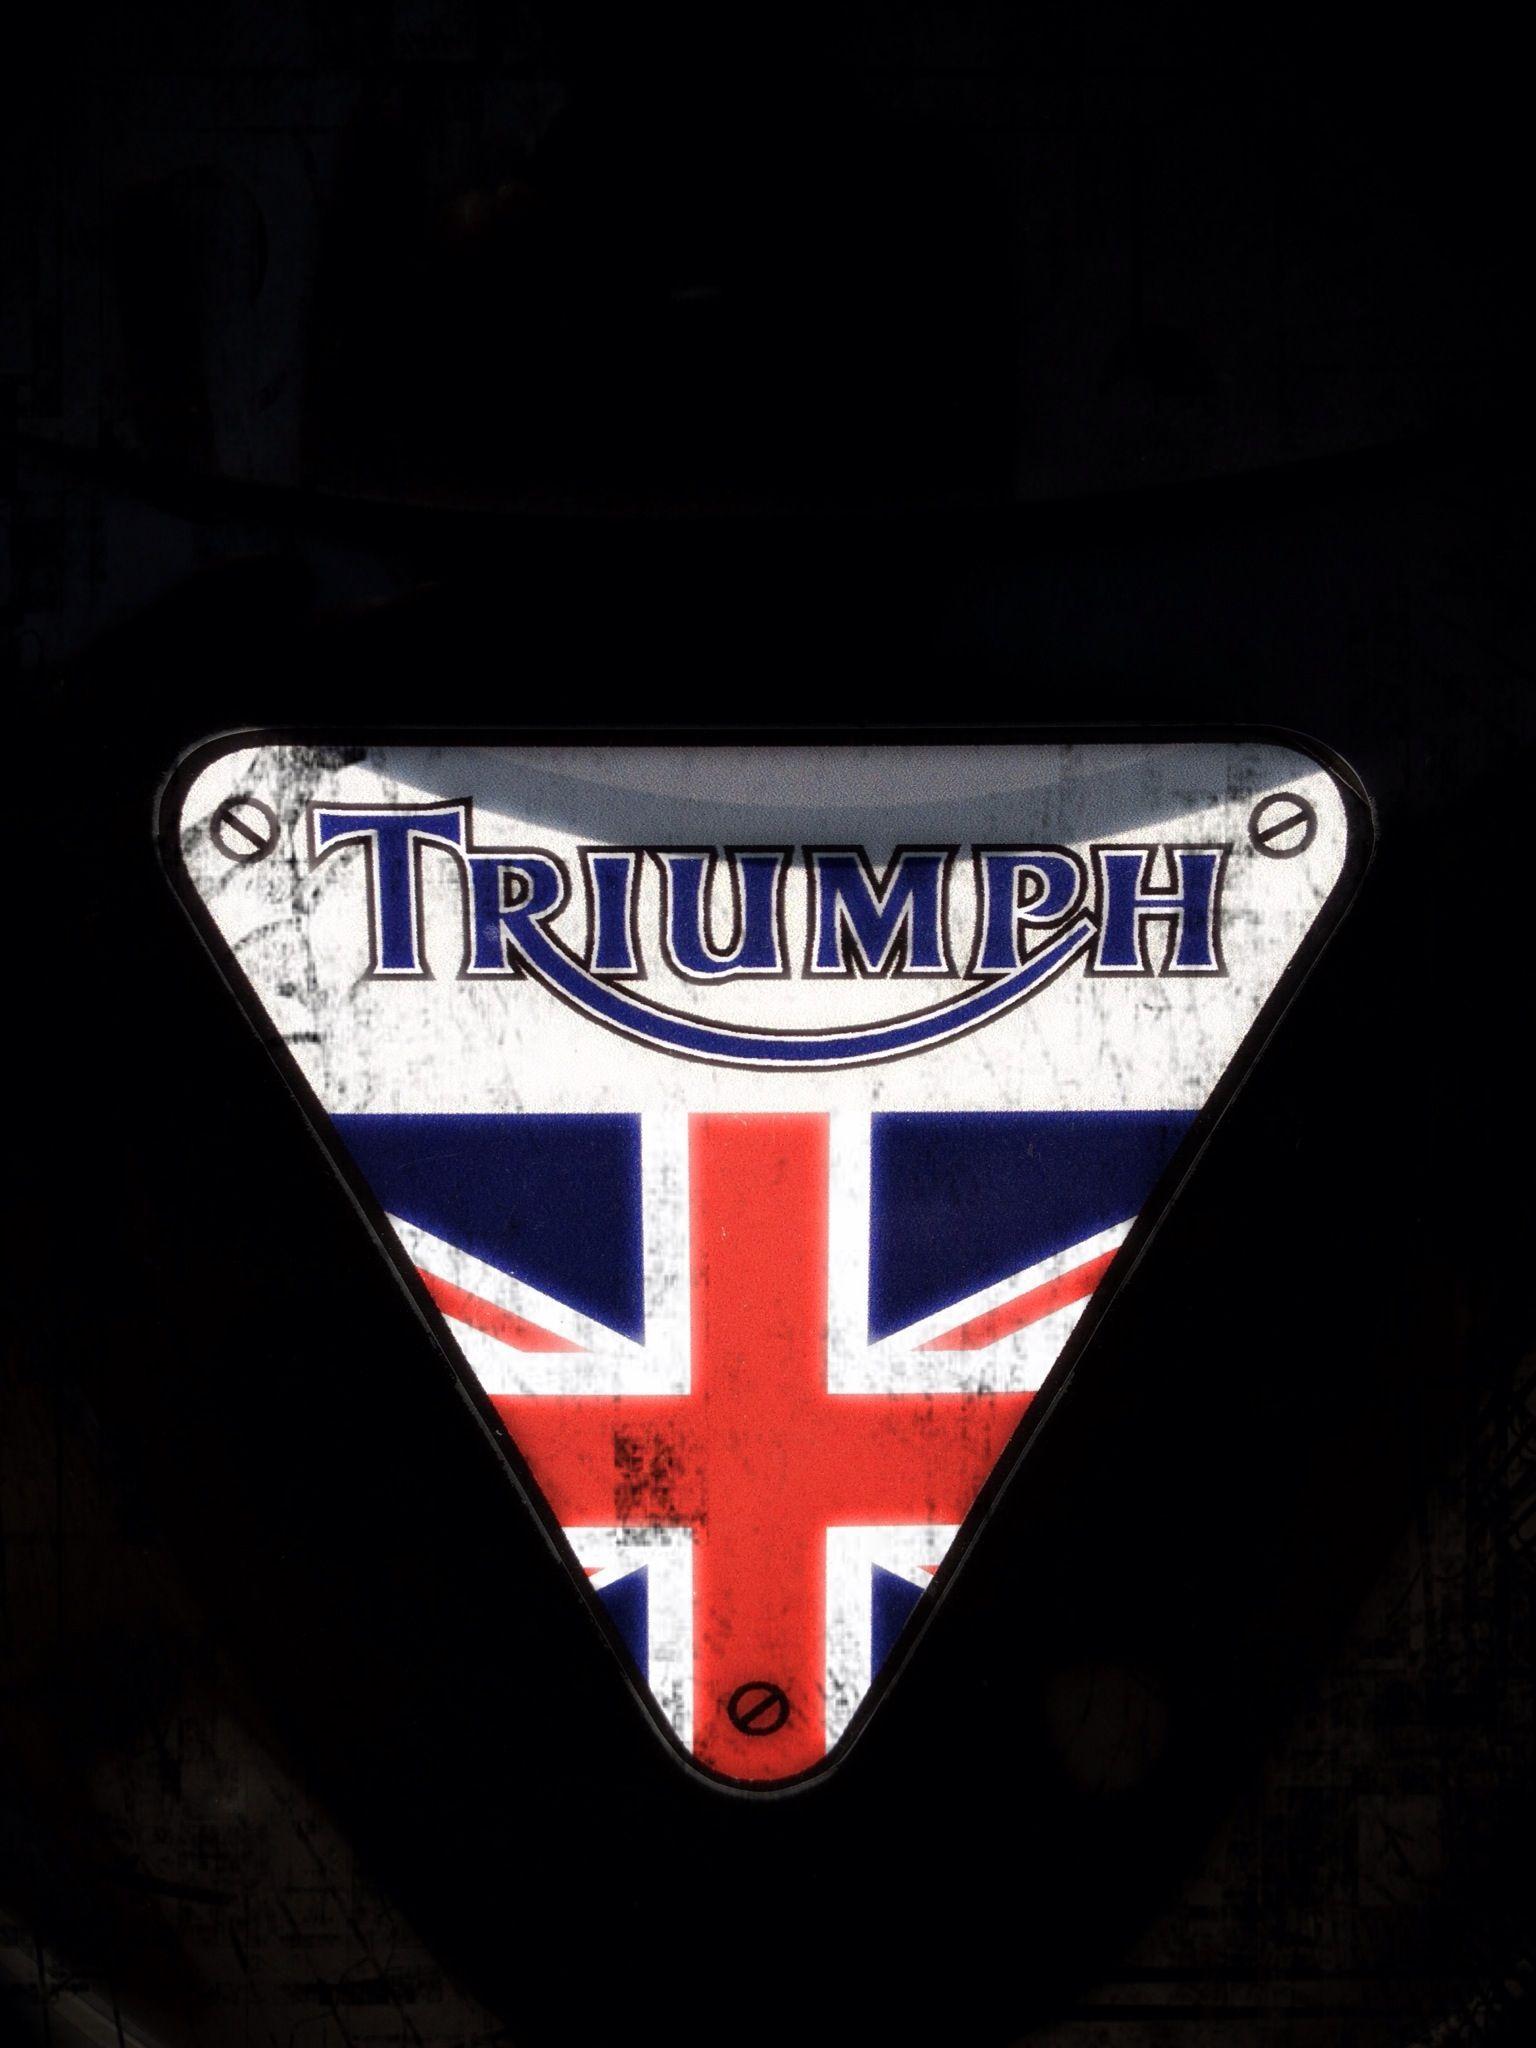 Triuph Logo - Triumph logo | Motostories | Triumph motorcycles, Triumph logo ...